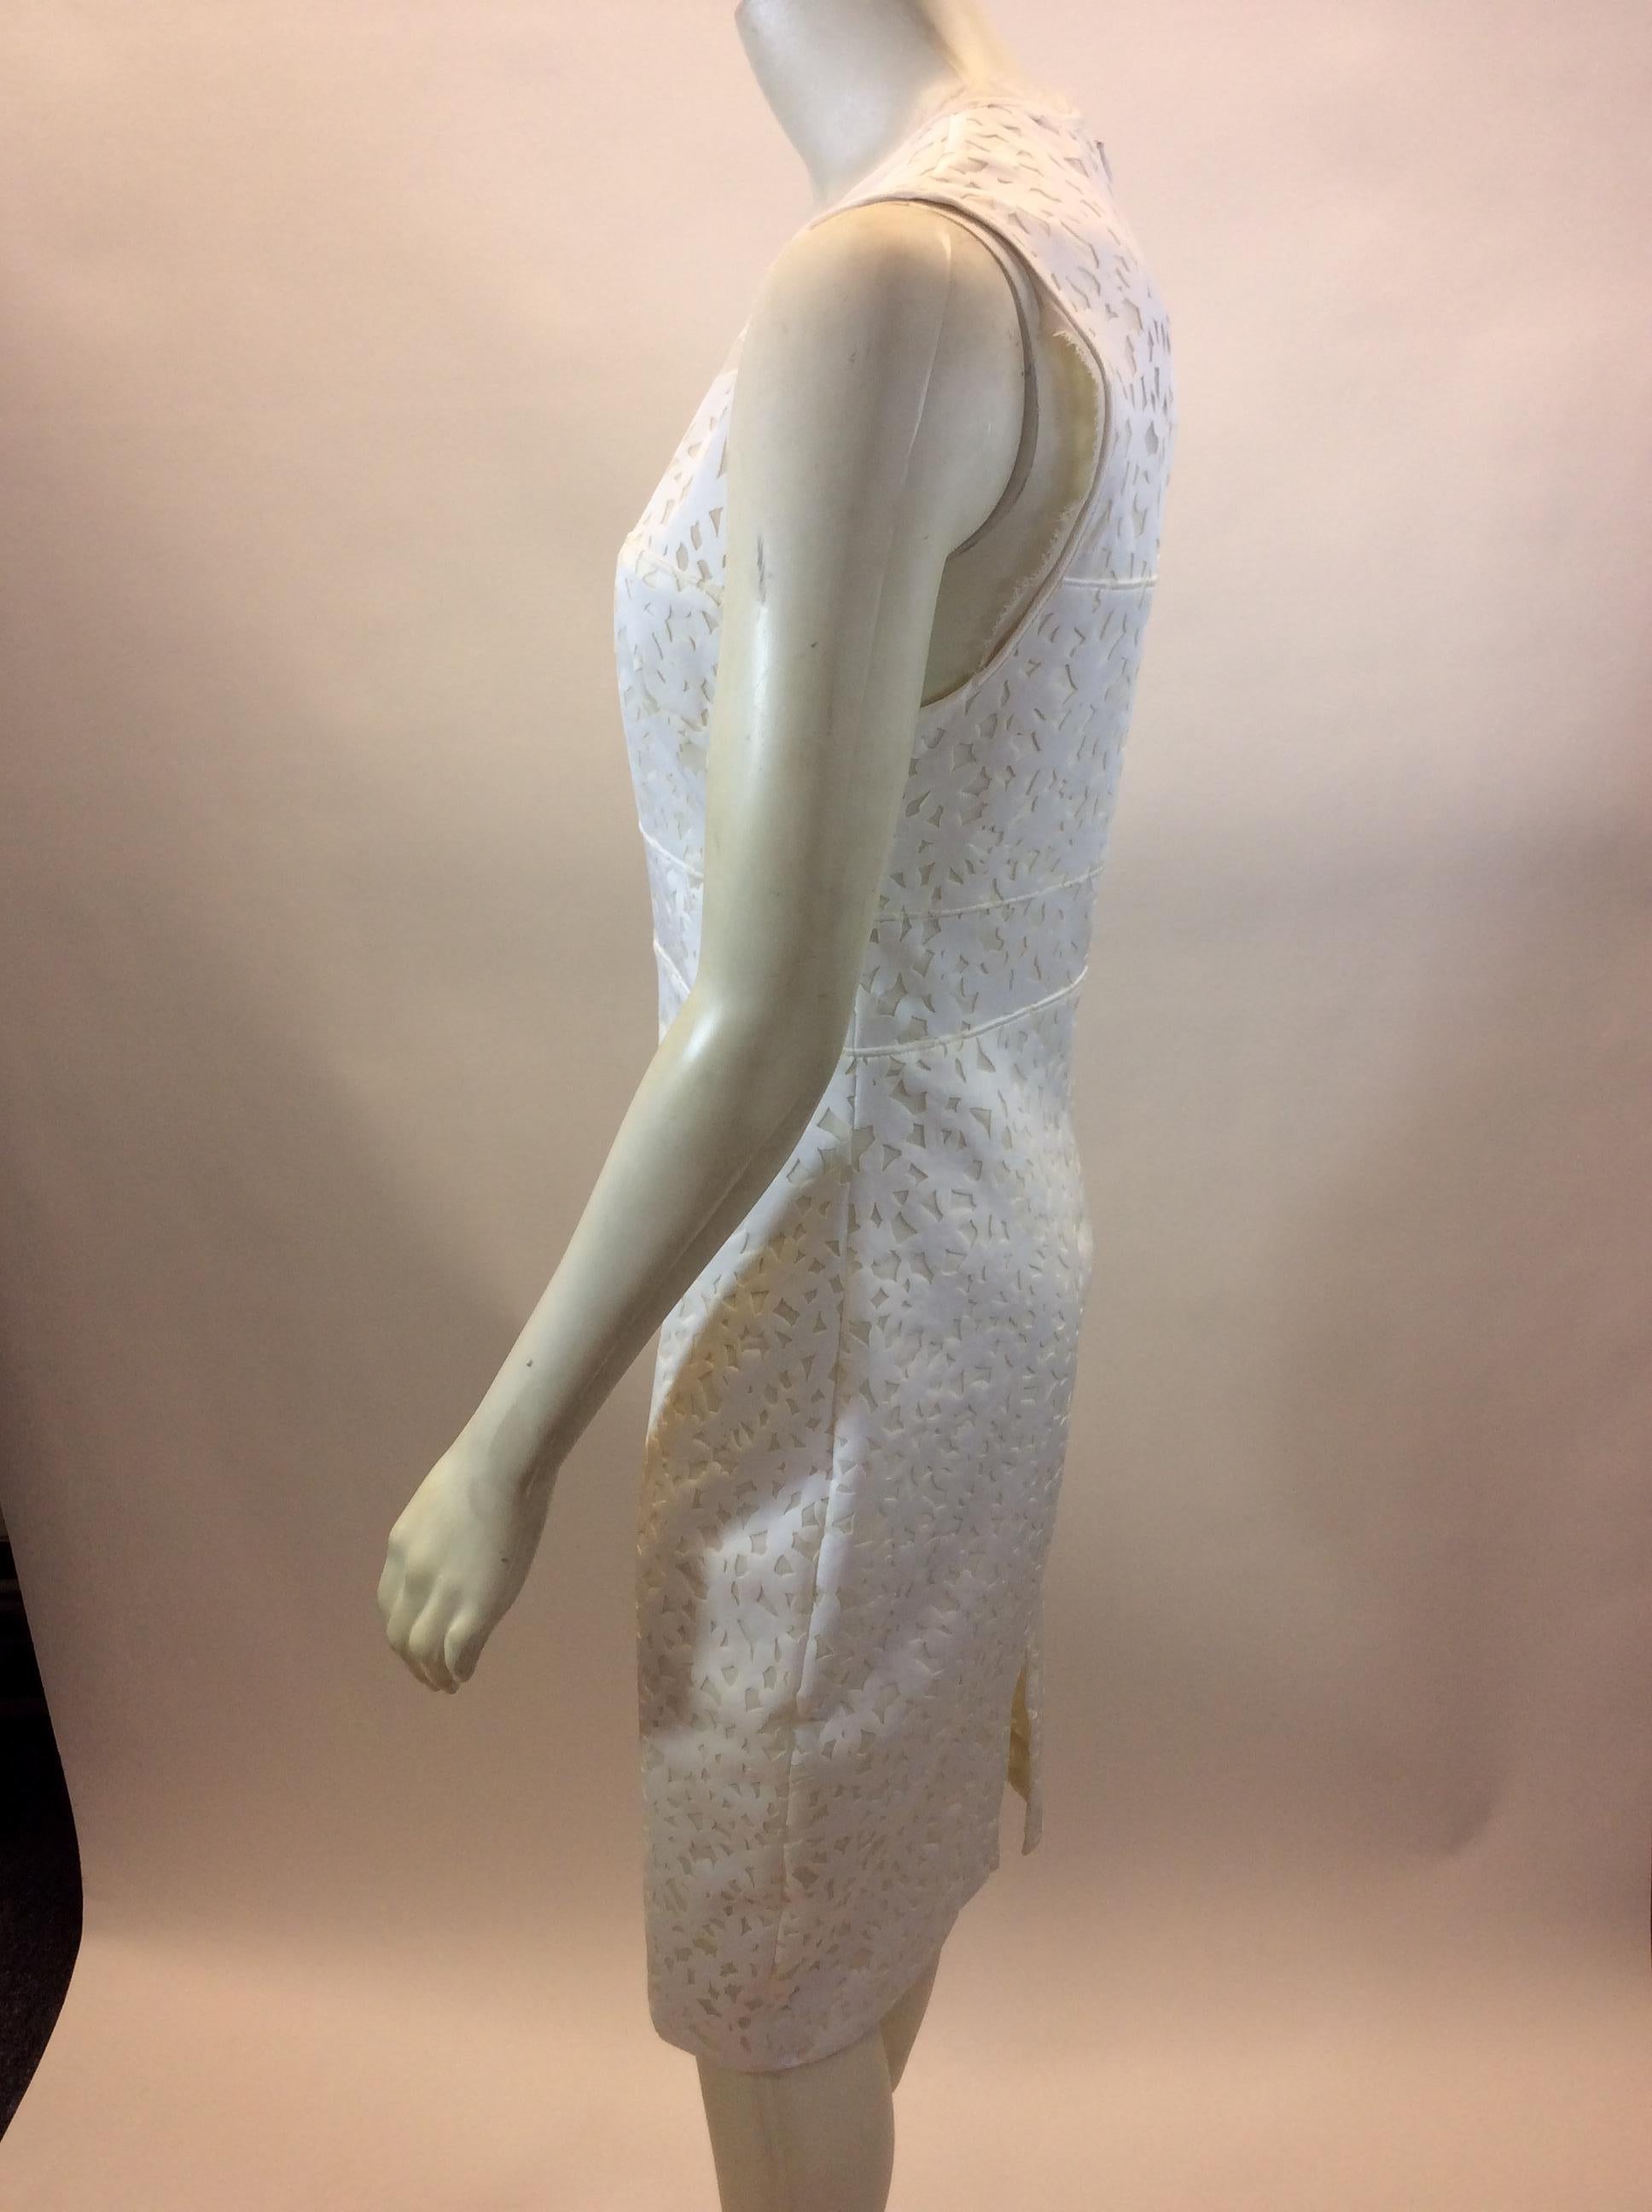 Elizabeth & James White Print Dress
$178
Made in China
65% Polyester, 24% Nylon, 11% Elastane
Size 8
Length 39